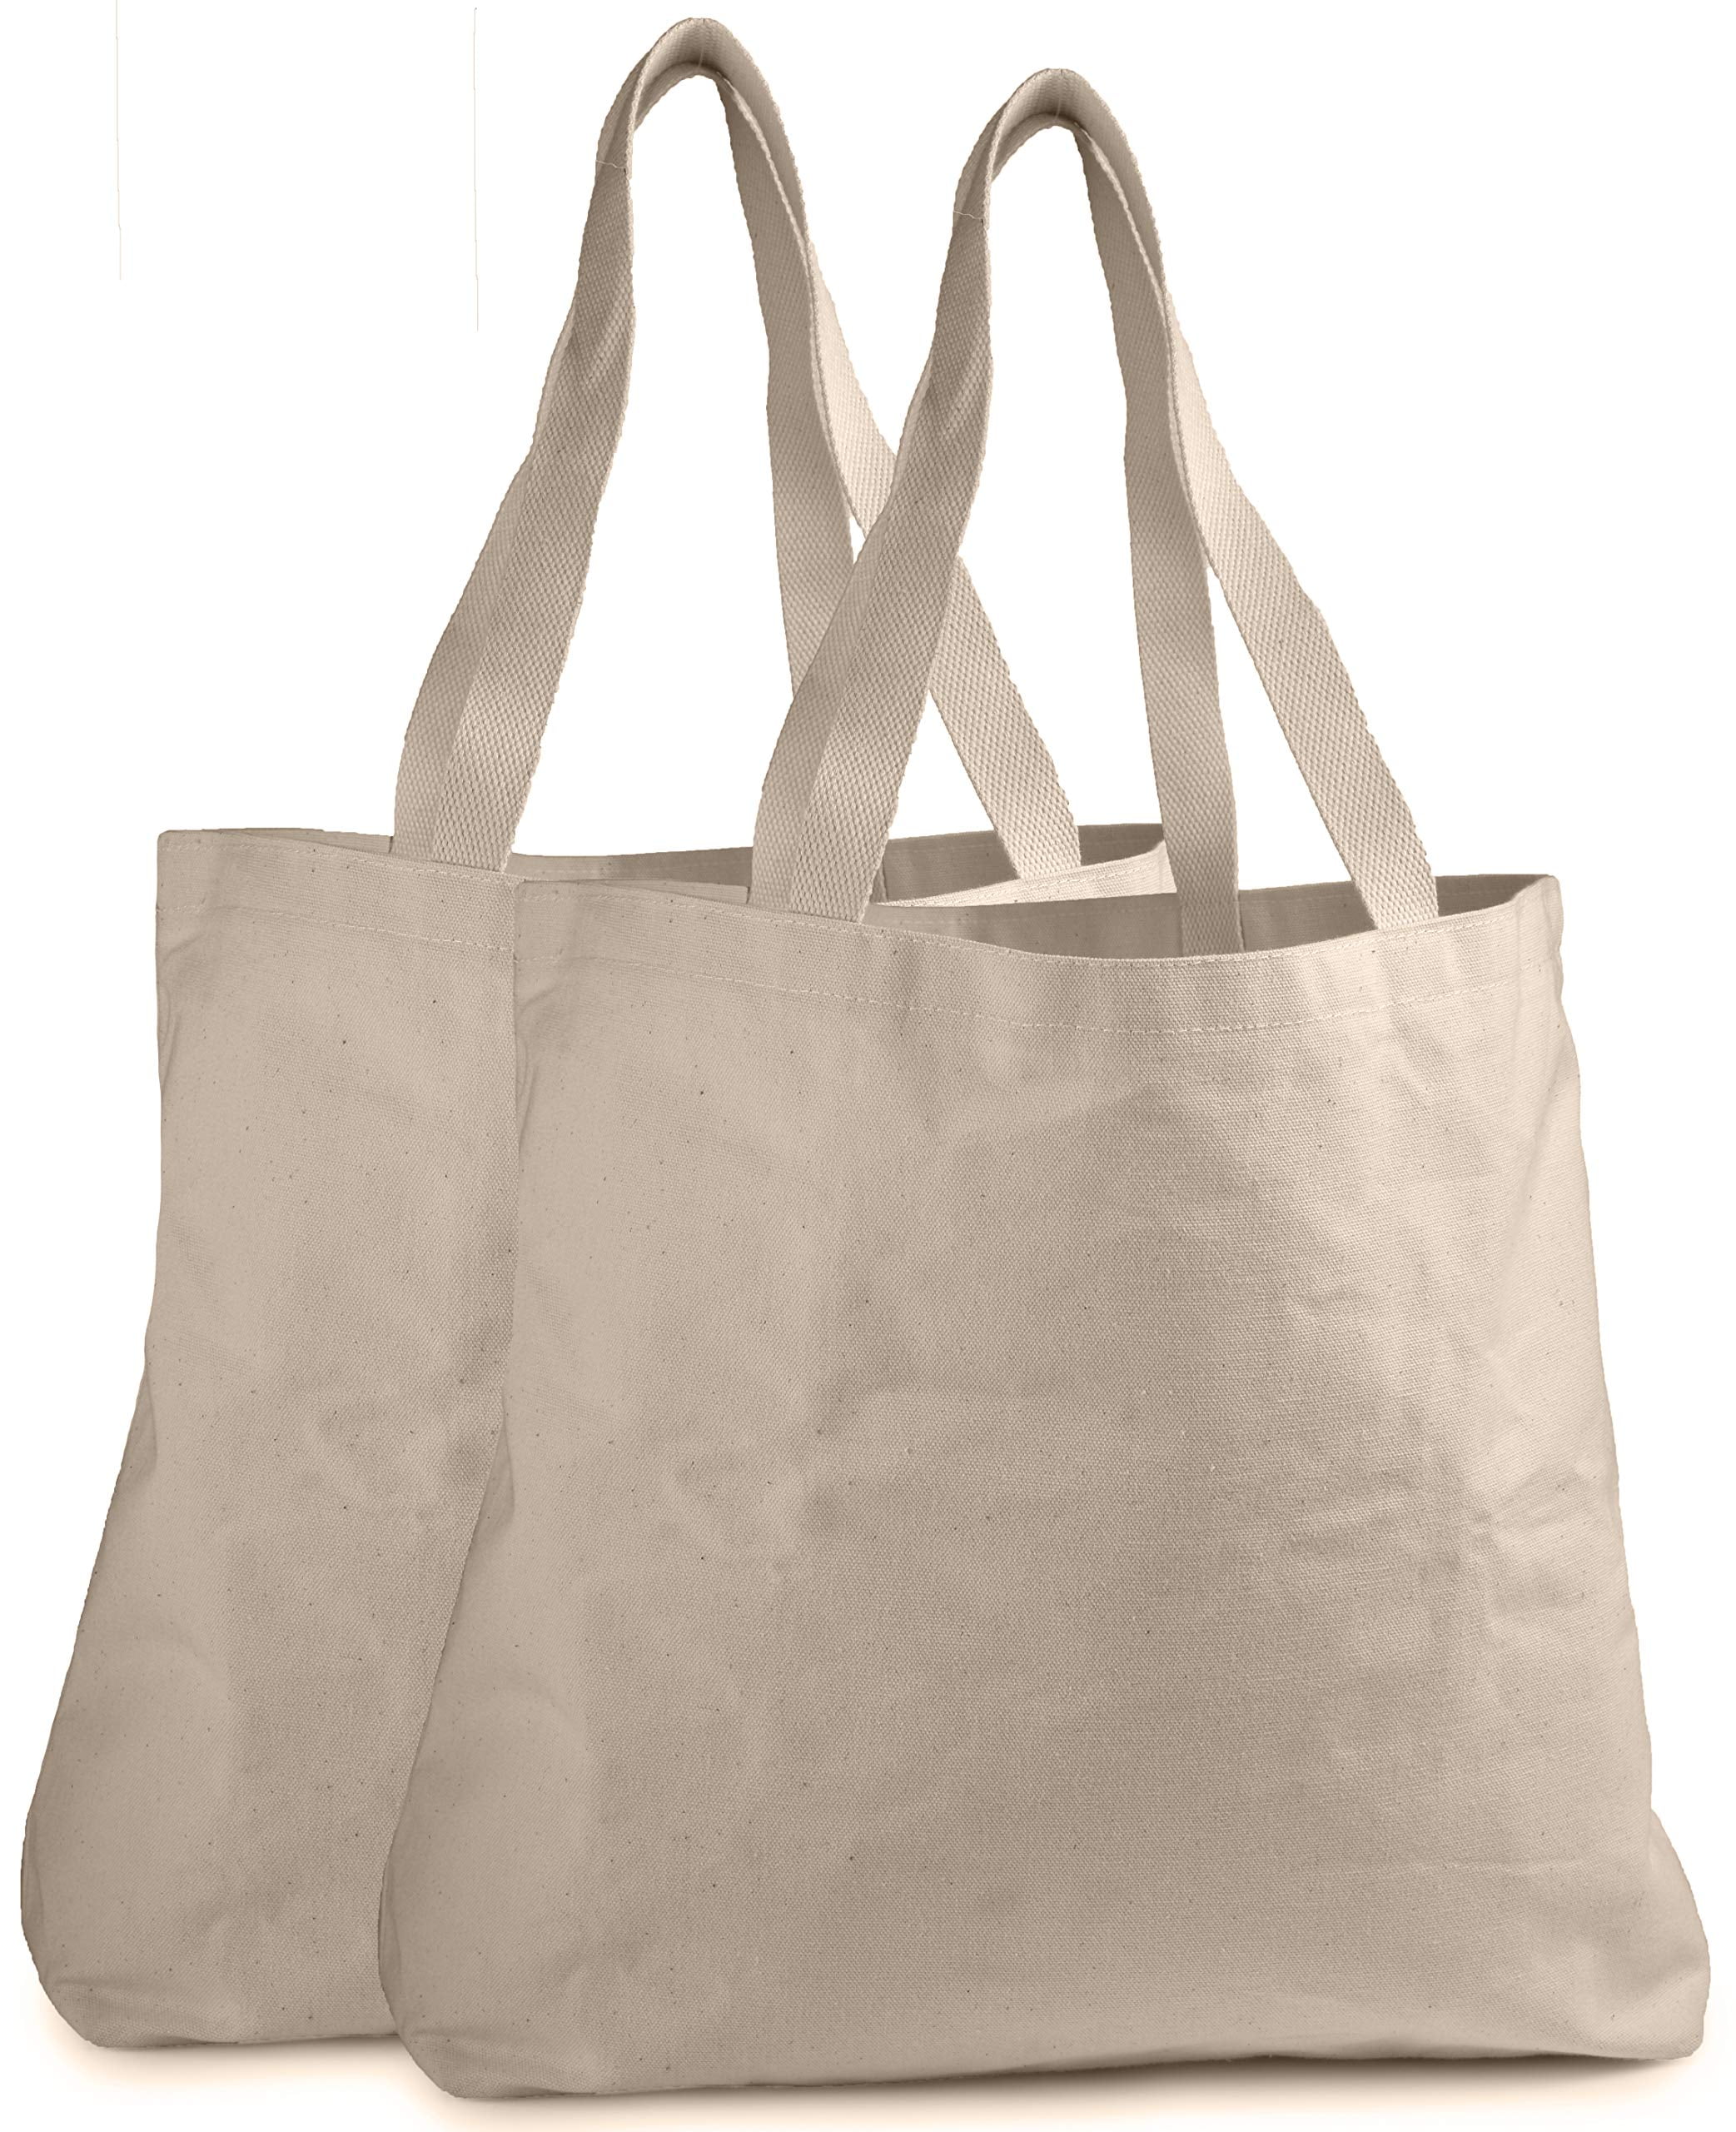 cow chicken Canvas Shoulder Bag Handbags Tote Bag Casual Shopping Bag Womens Farm animals horse pig 